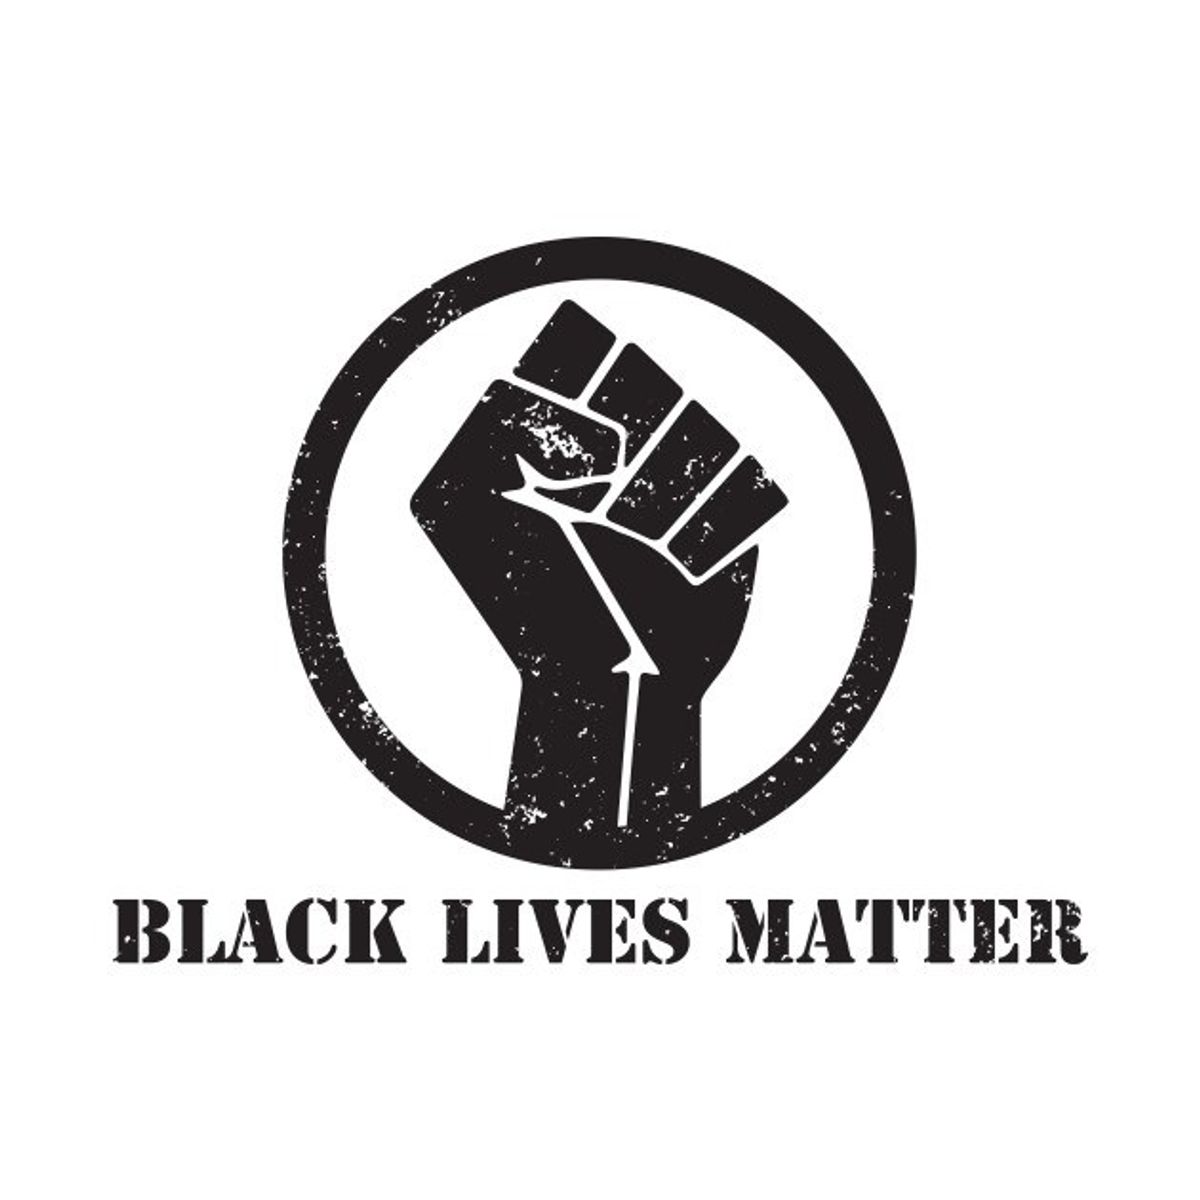 I'm An Advocate For Black Lives Matter